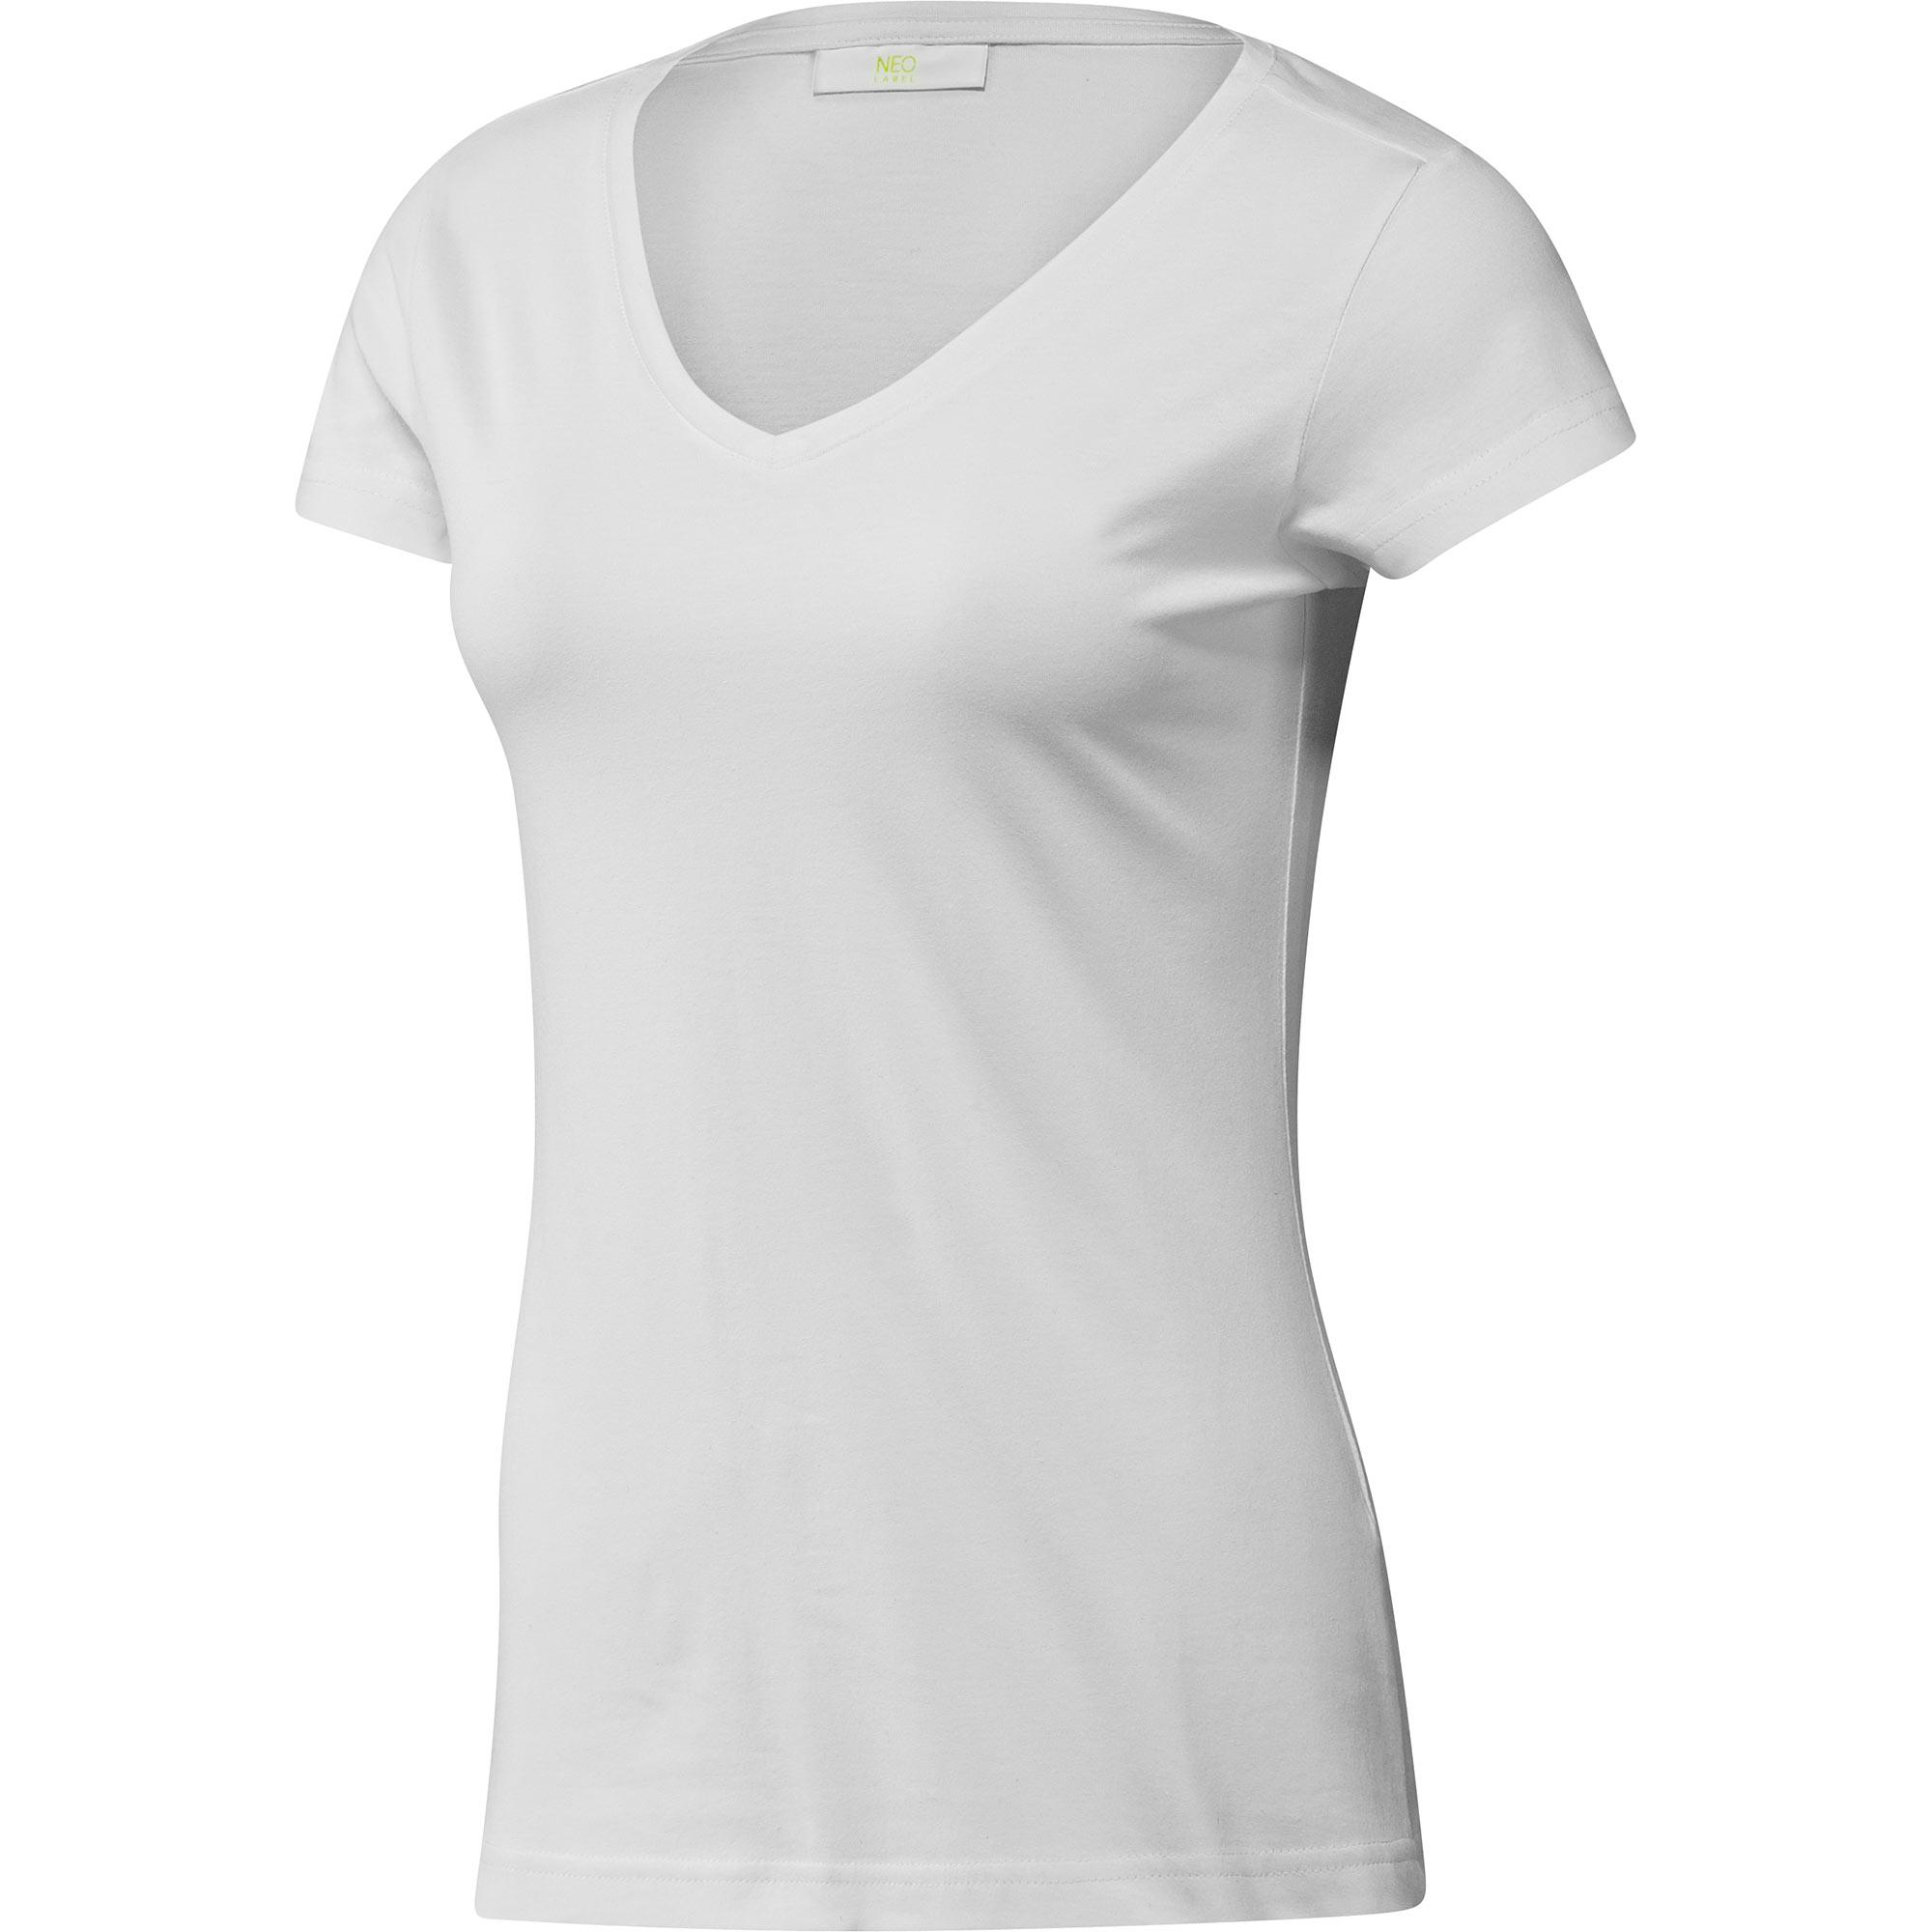 Foto adidas Camiseta de cuello de pico Fashion Basics Mujer foto 431901